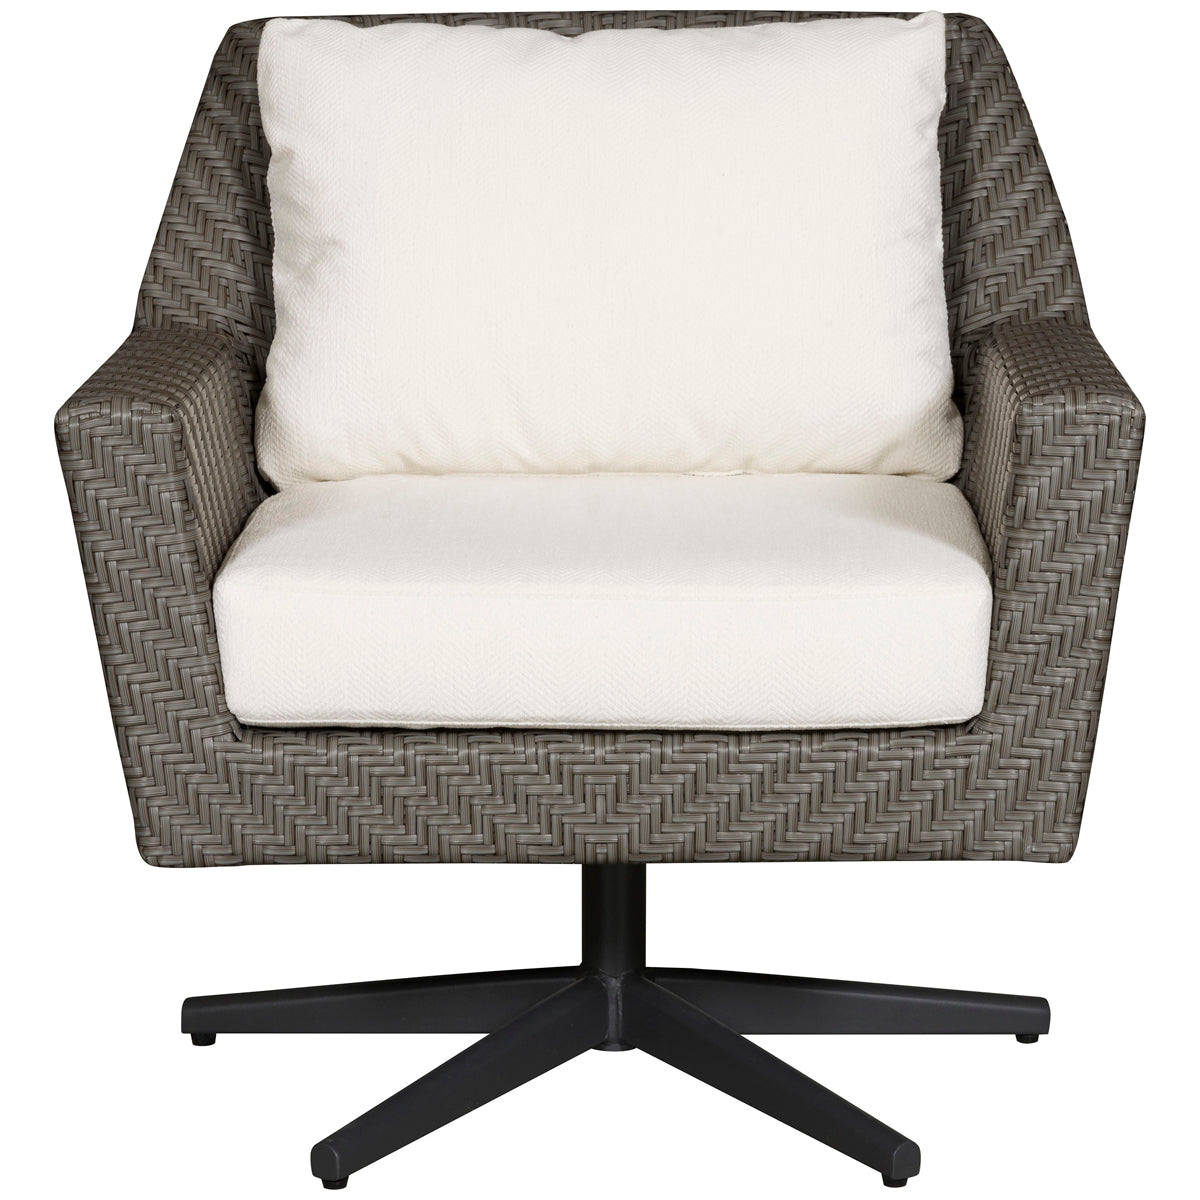 Vanguard Furniture Seagate Outdoor Swivel Chair